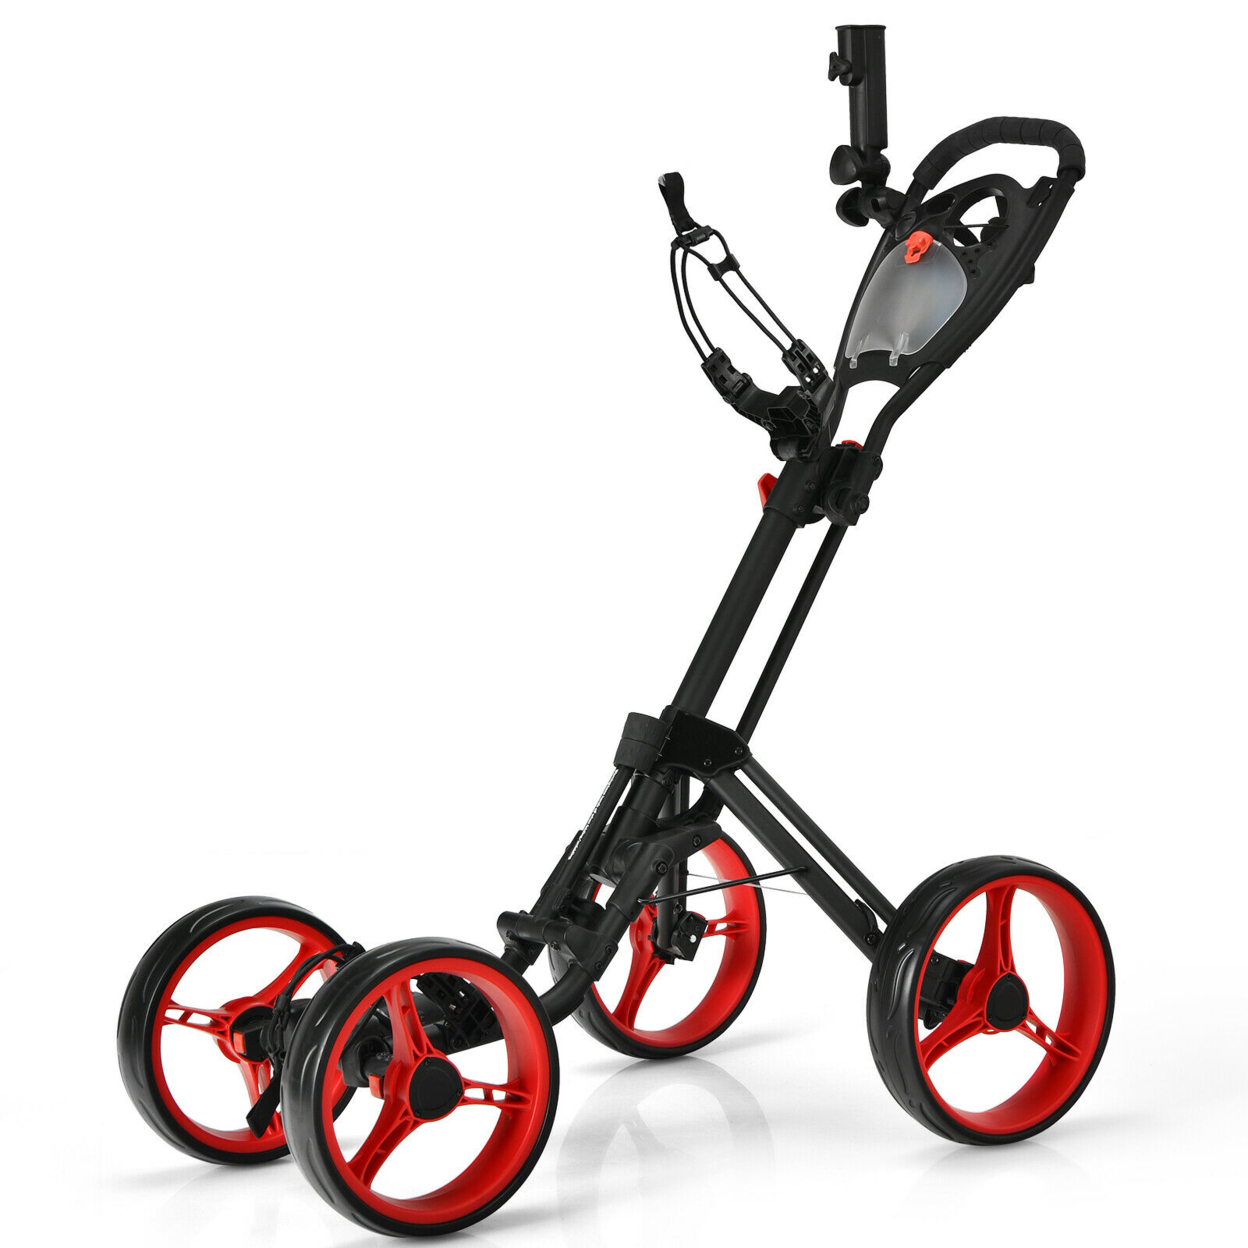 4 Wheels Folding Golf Push Cart W/ Adjustable Handle Foot Brake - Red